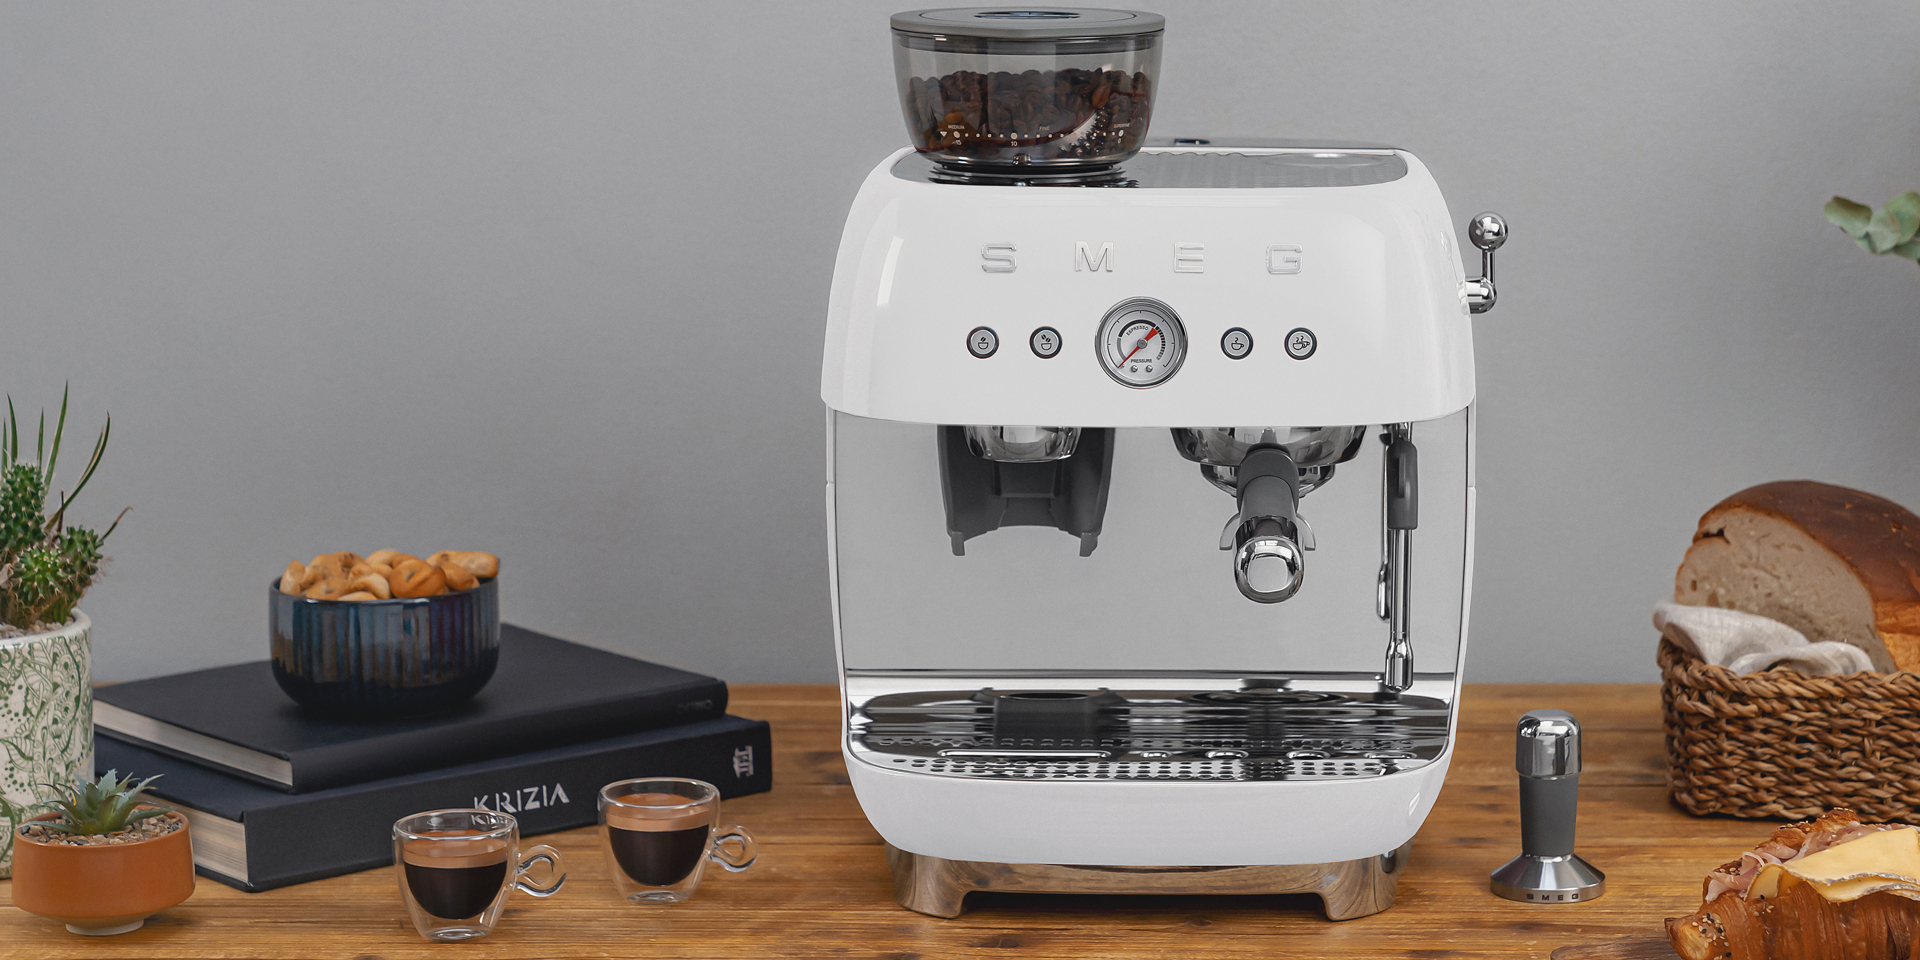 SMEG Retro Style Drip Coffee Maker - Review